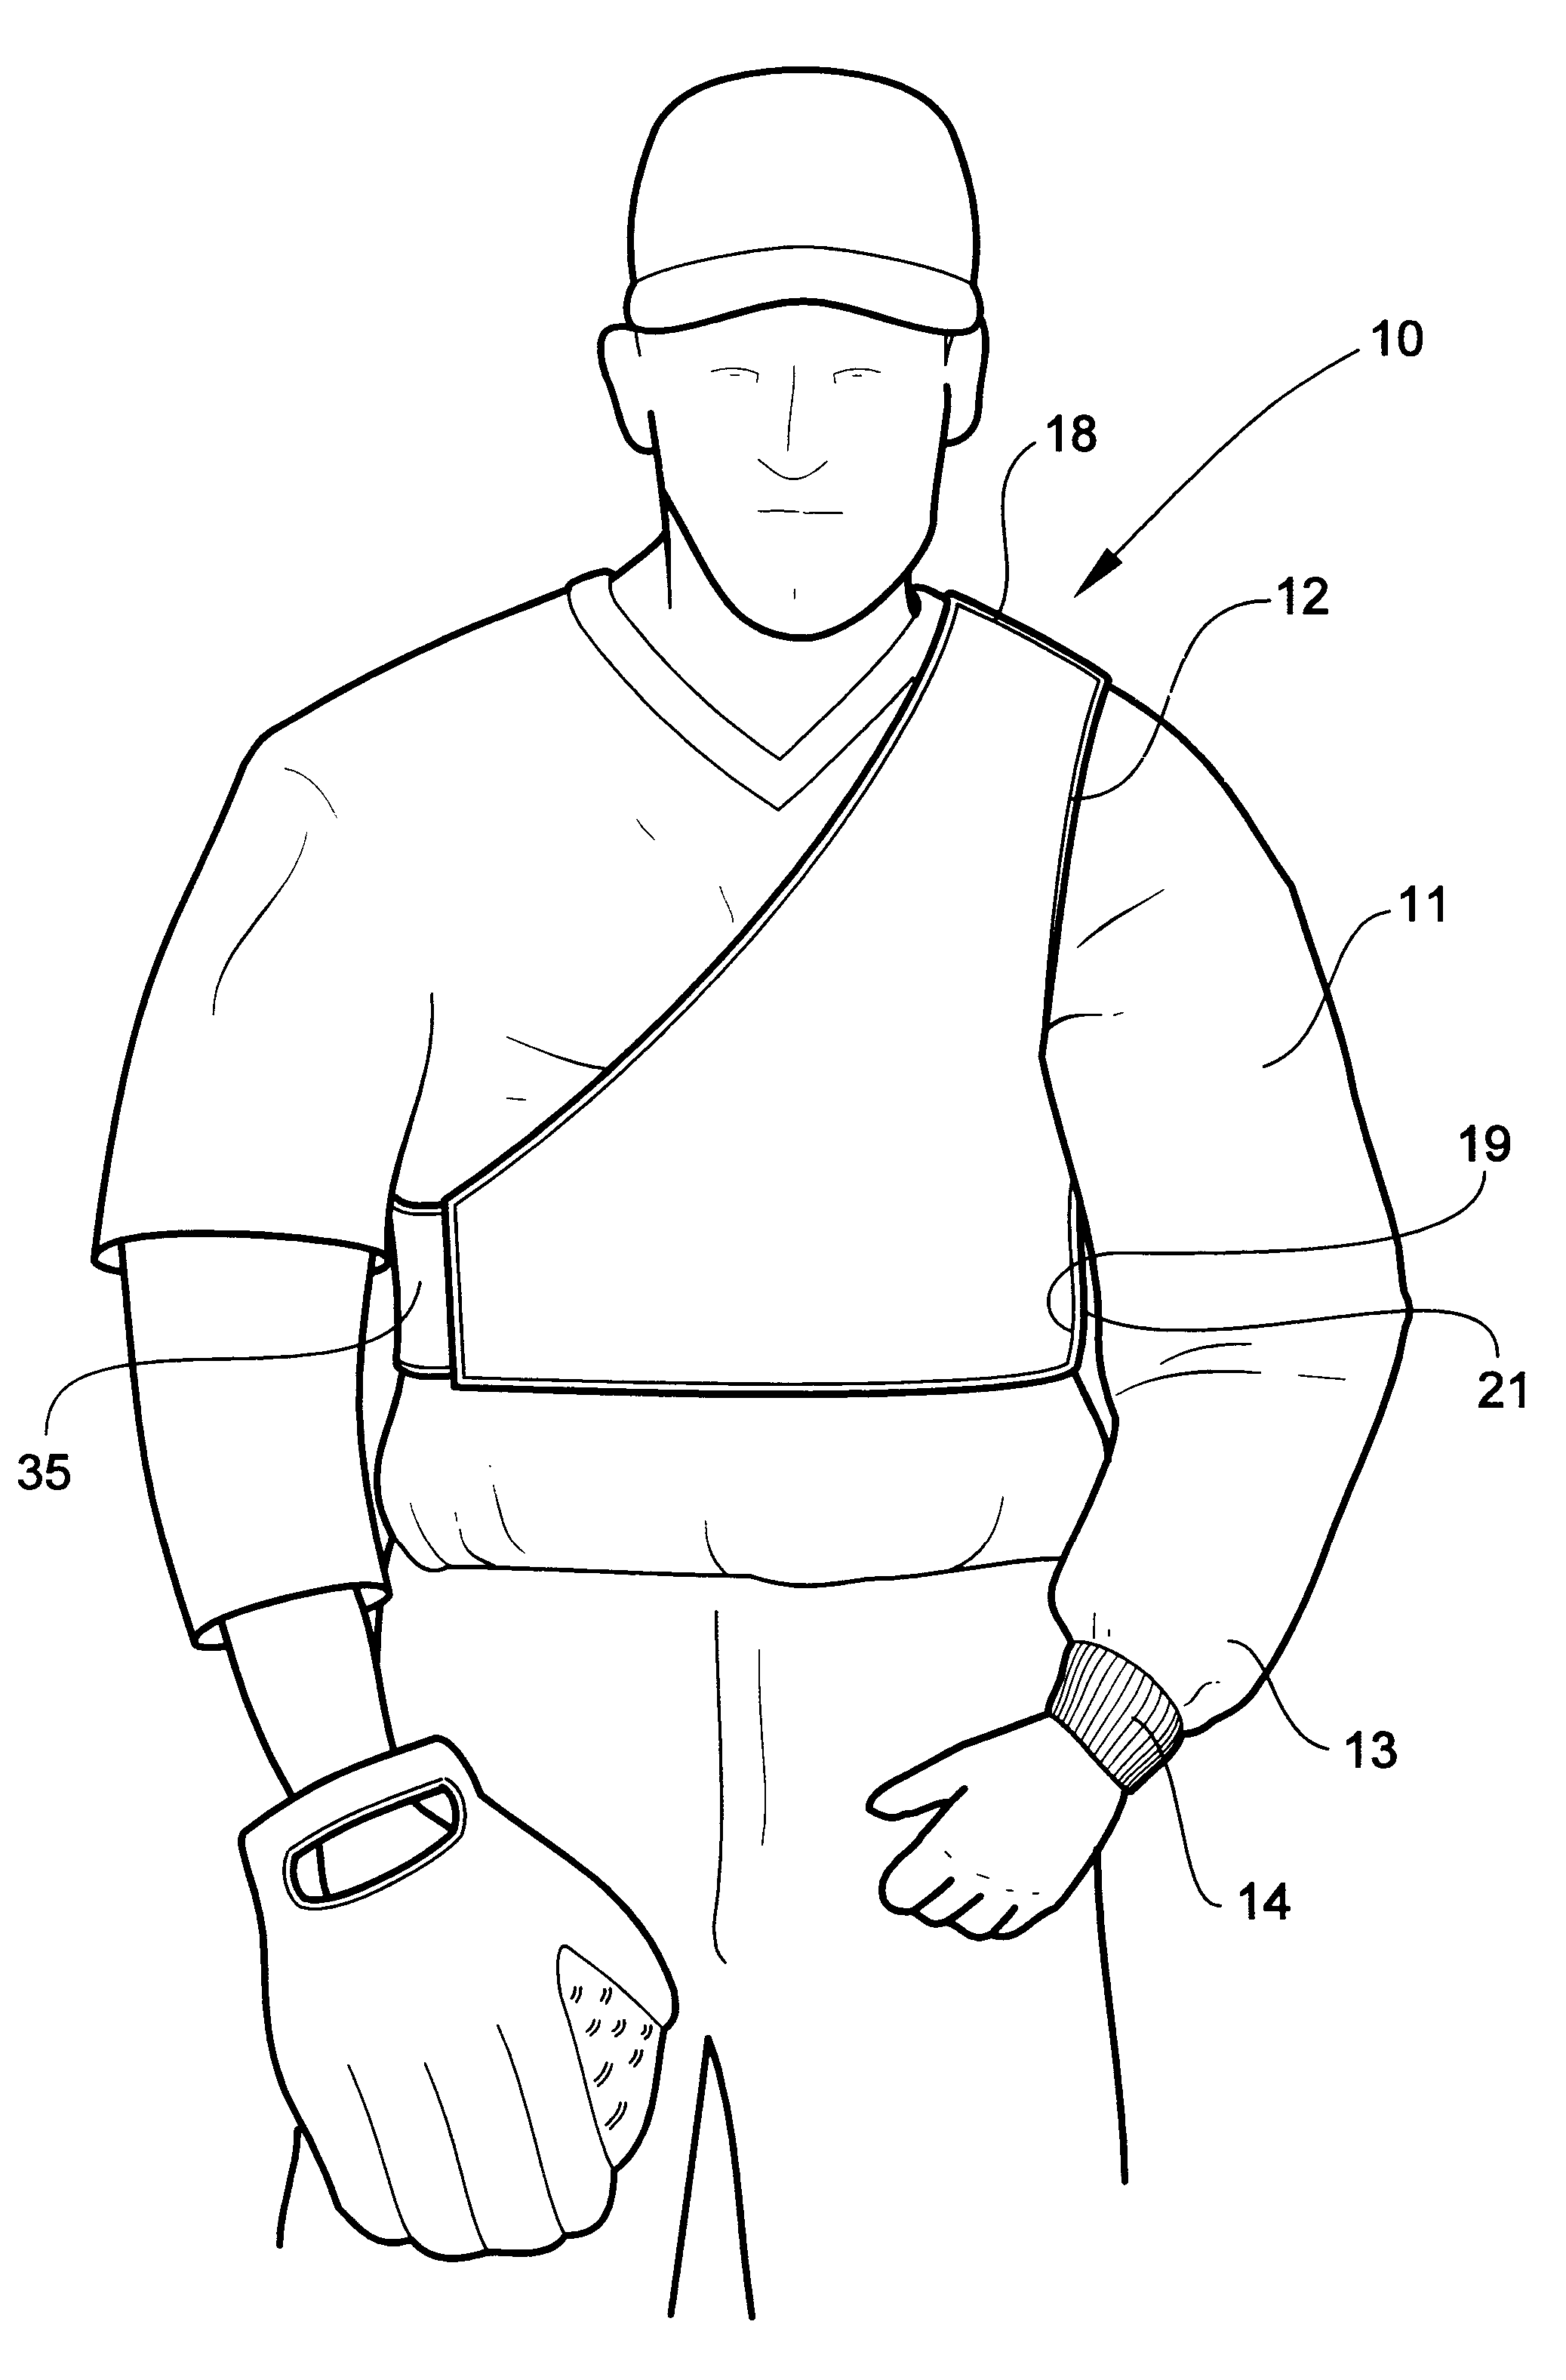 Warm-up garment with torso wrap